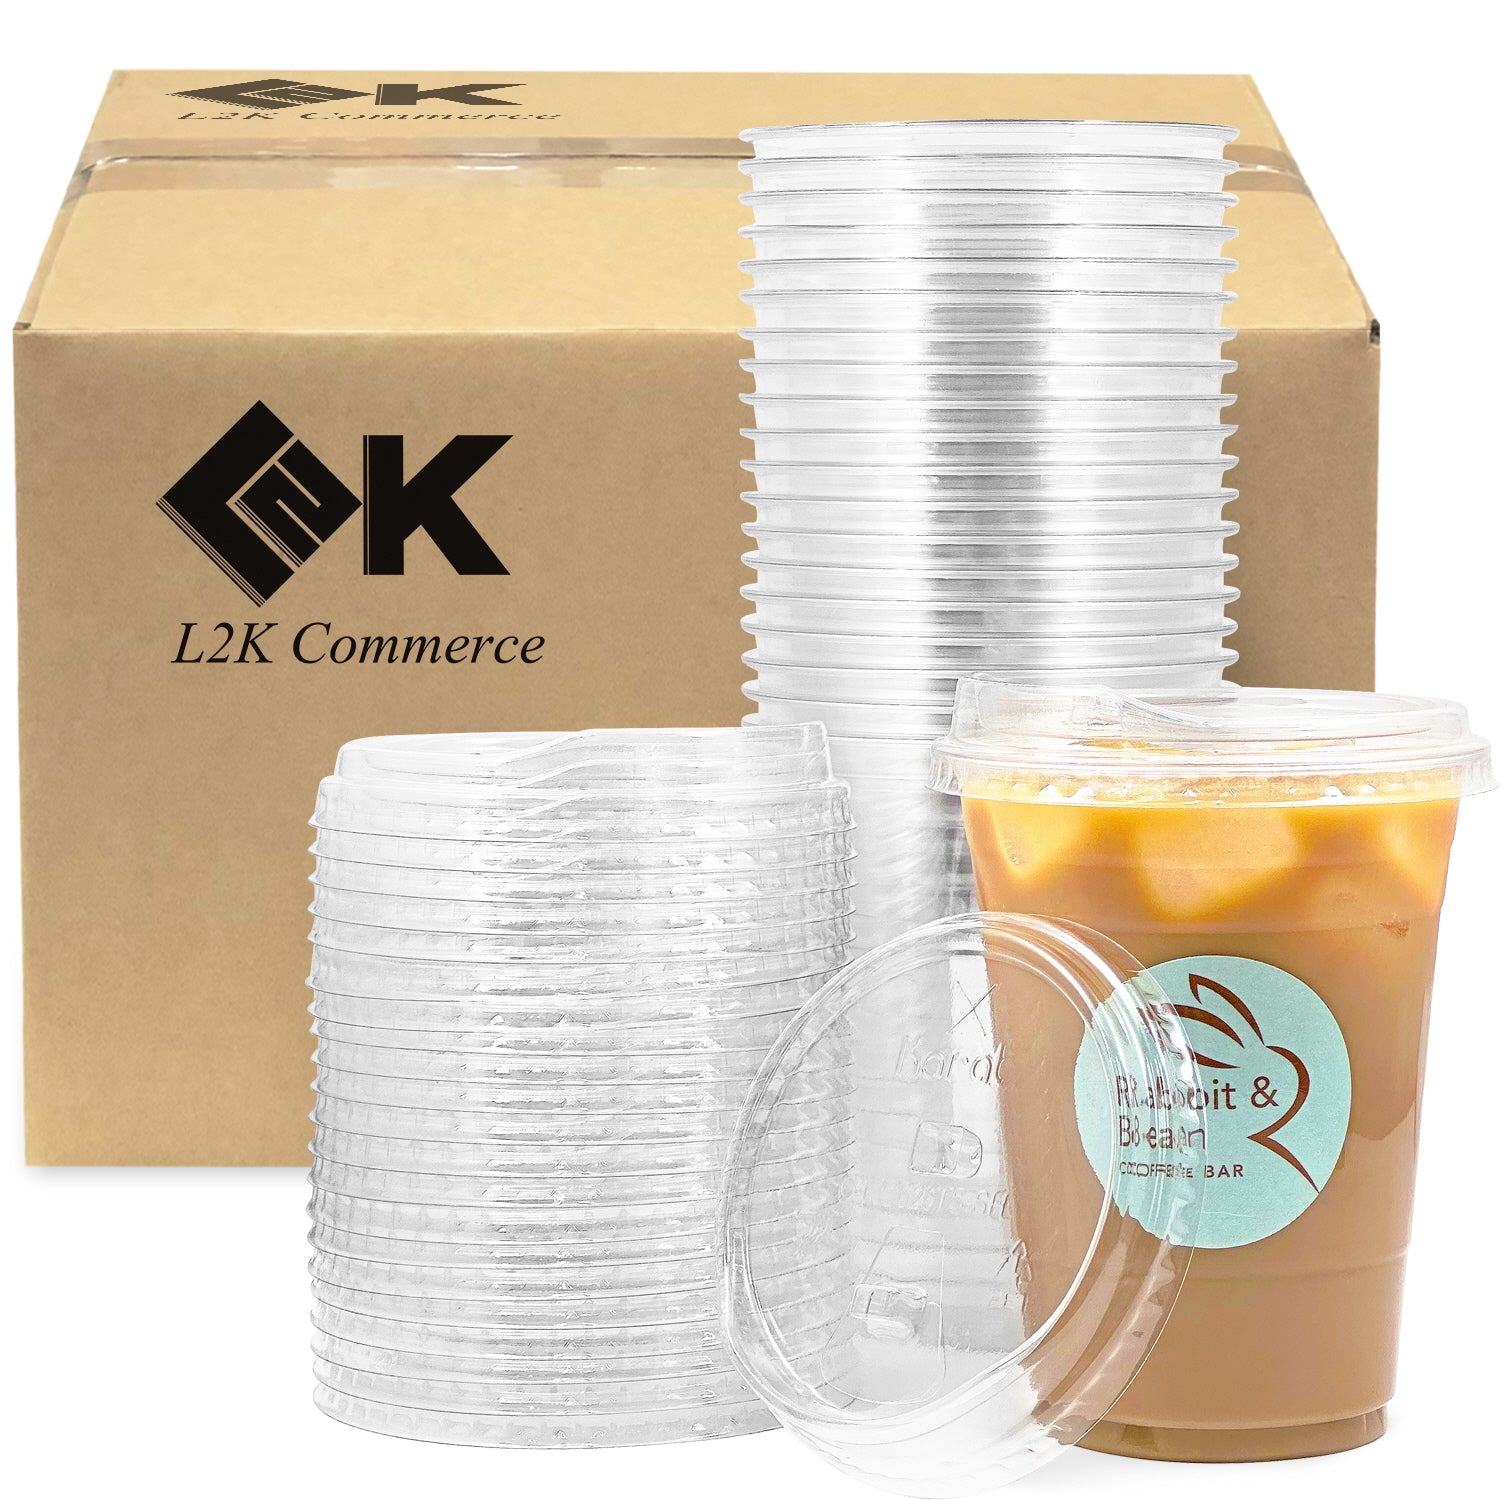 Plastic Mugs - Clear Square Coffee Mugs